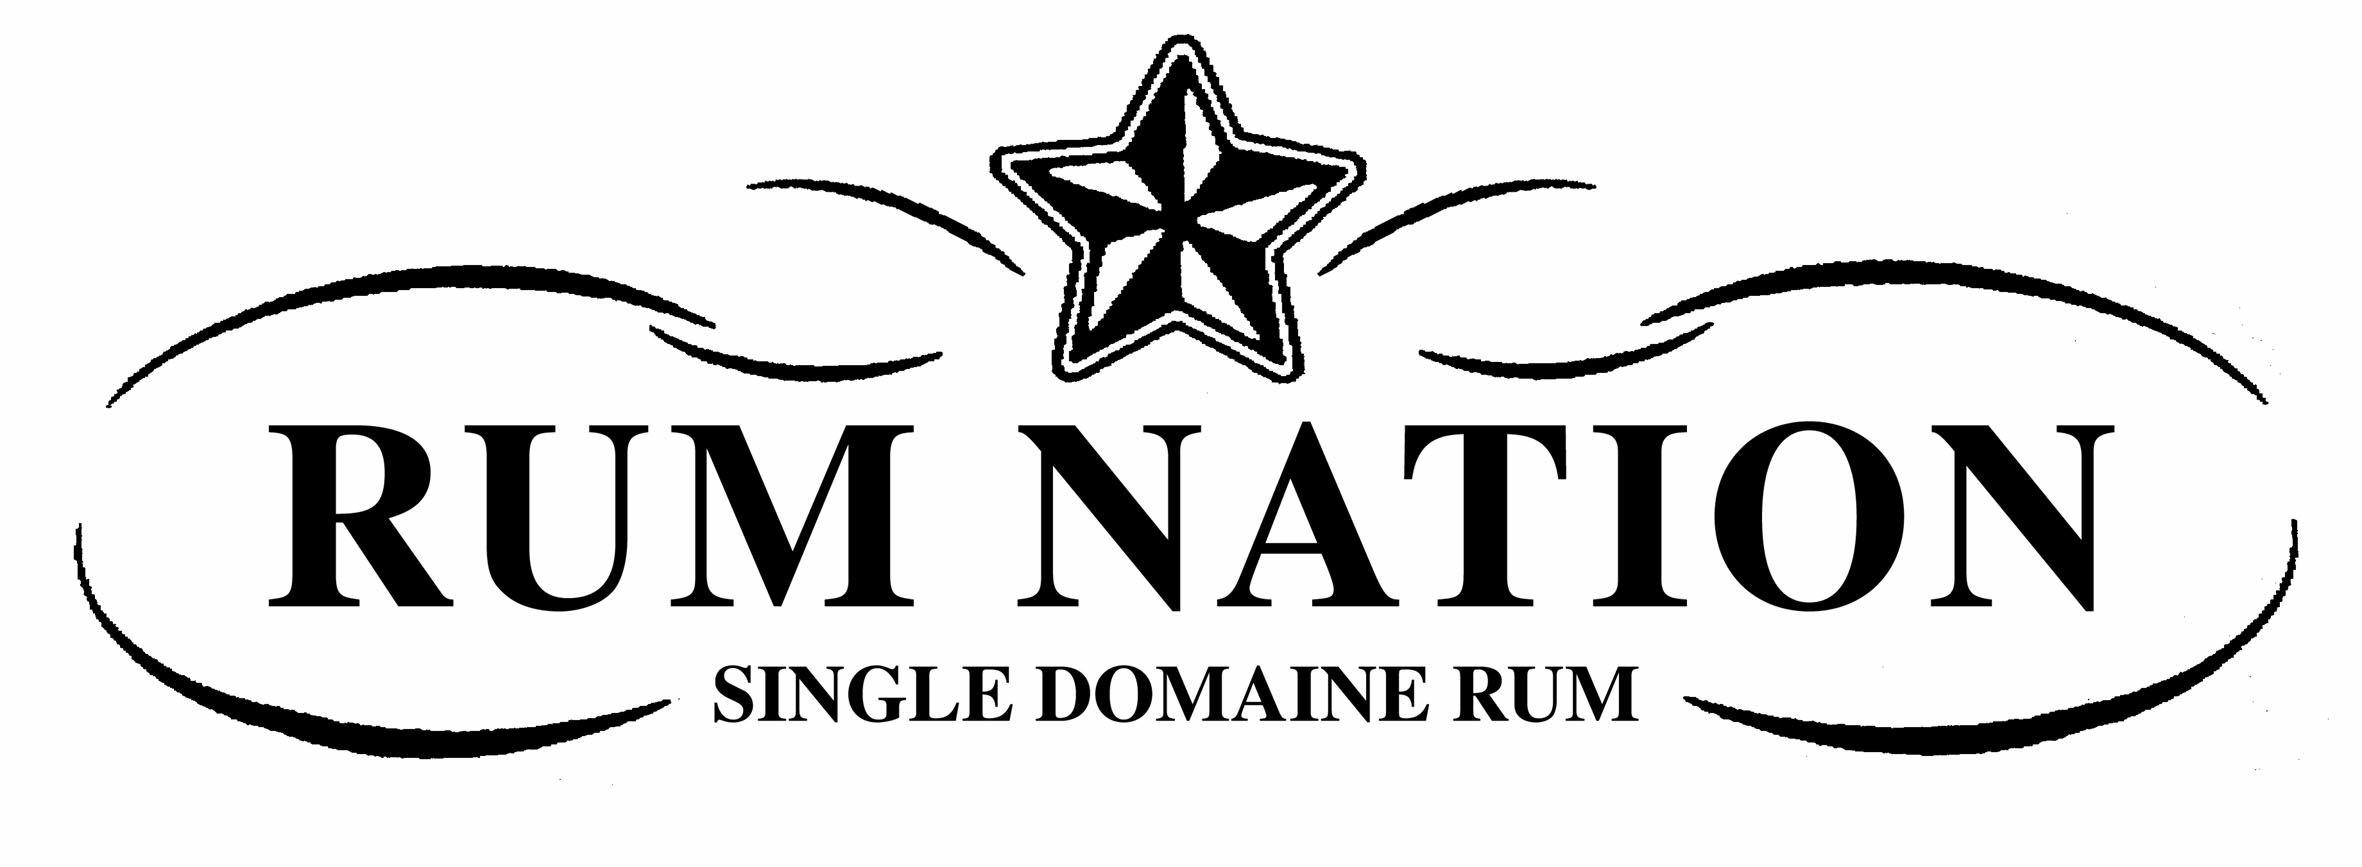 Rum Logo - Rum Nation logo 2